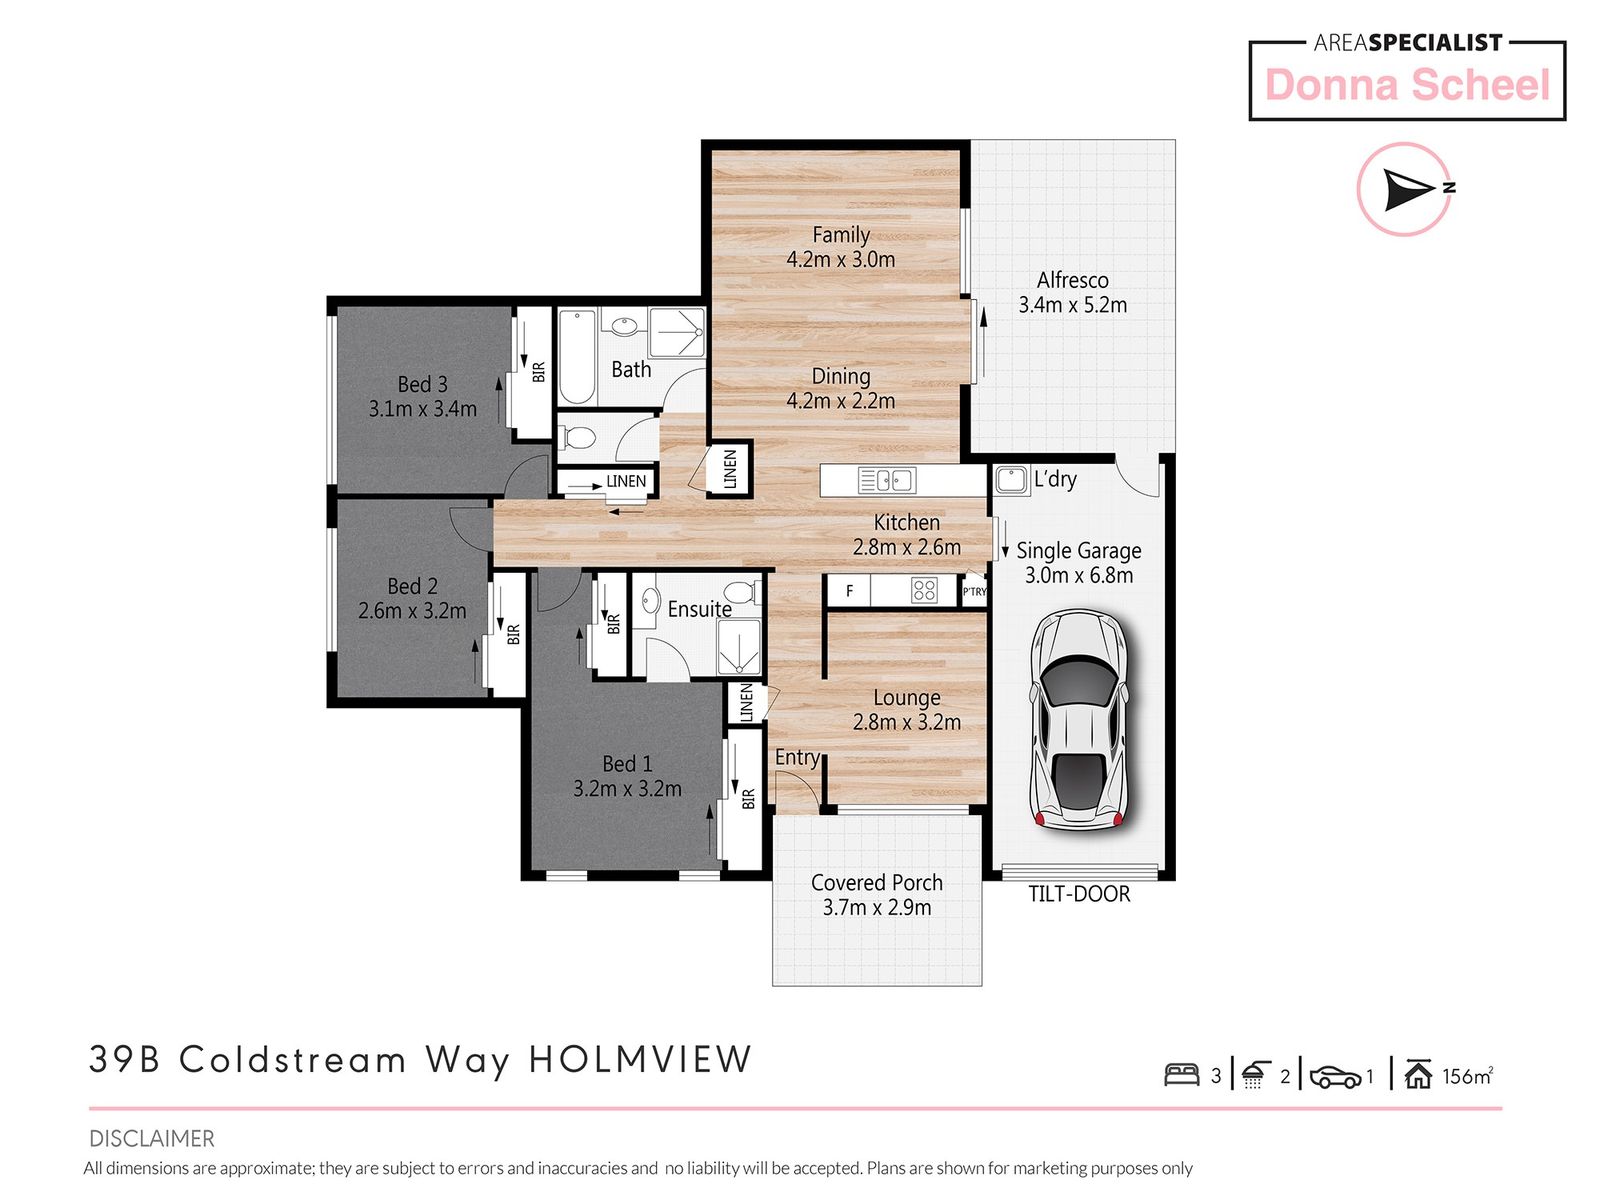 39B Coldstream Way,floor plan